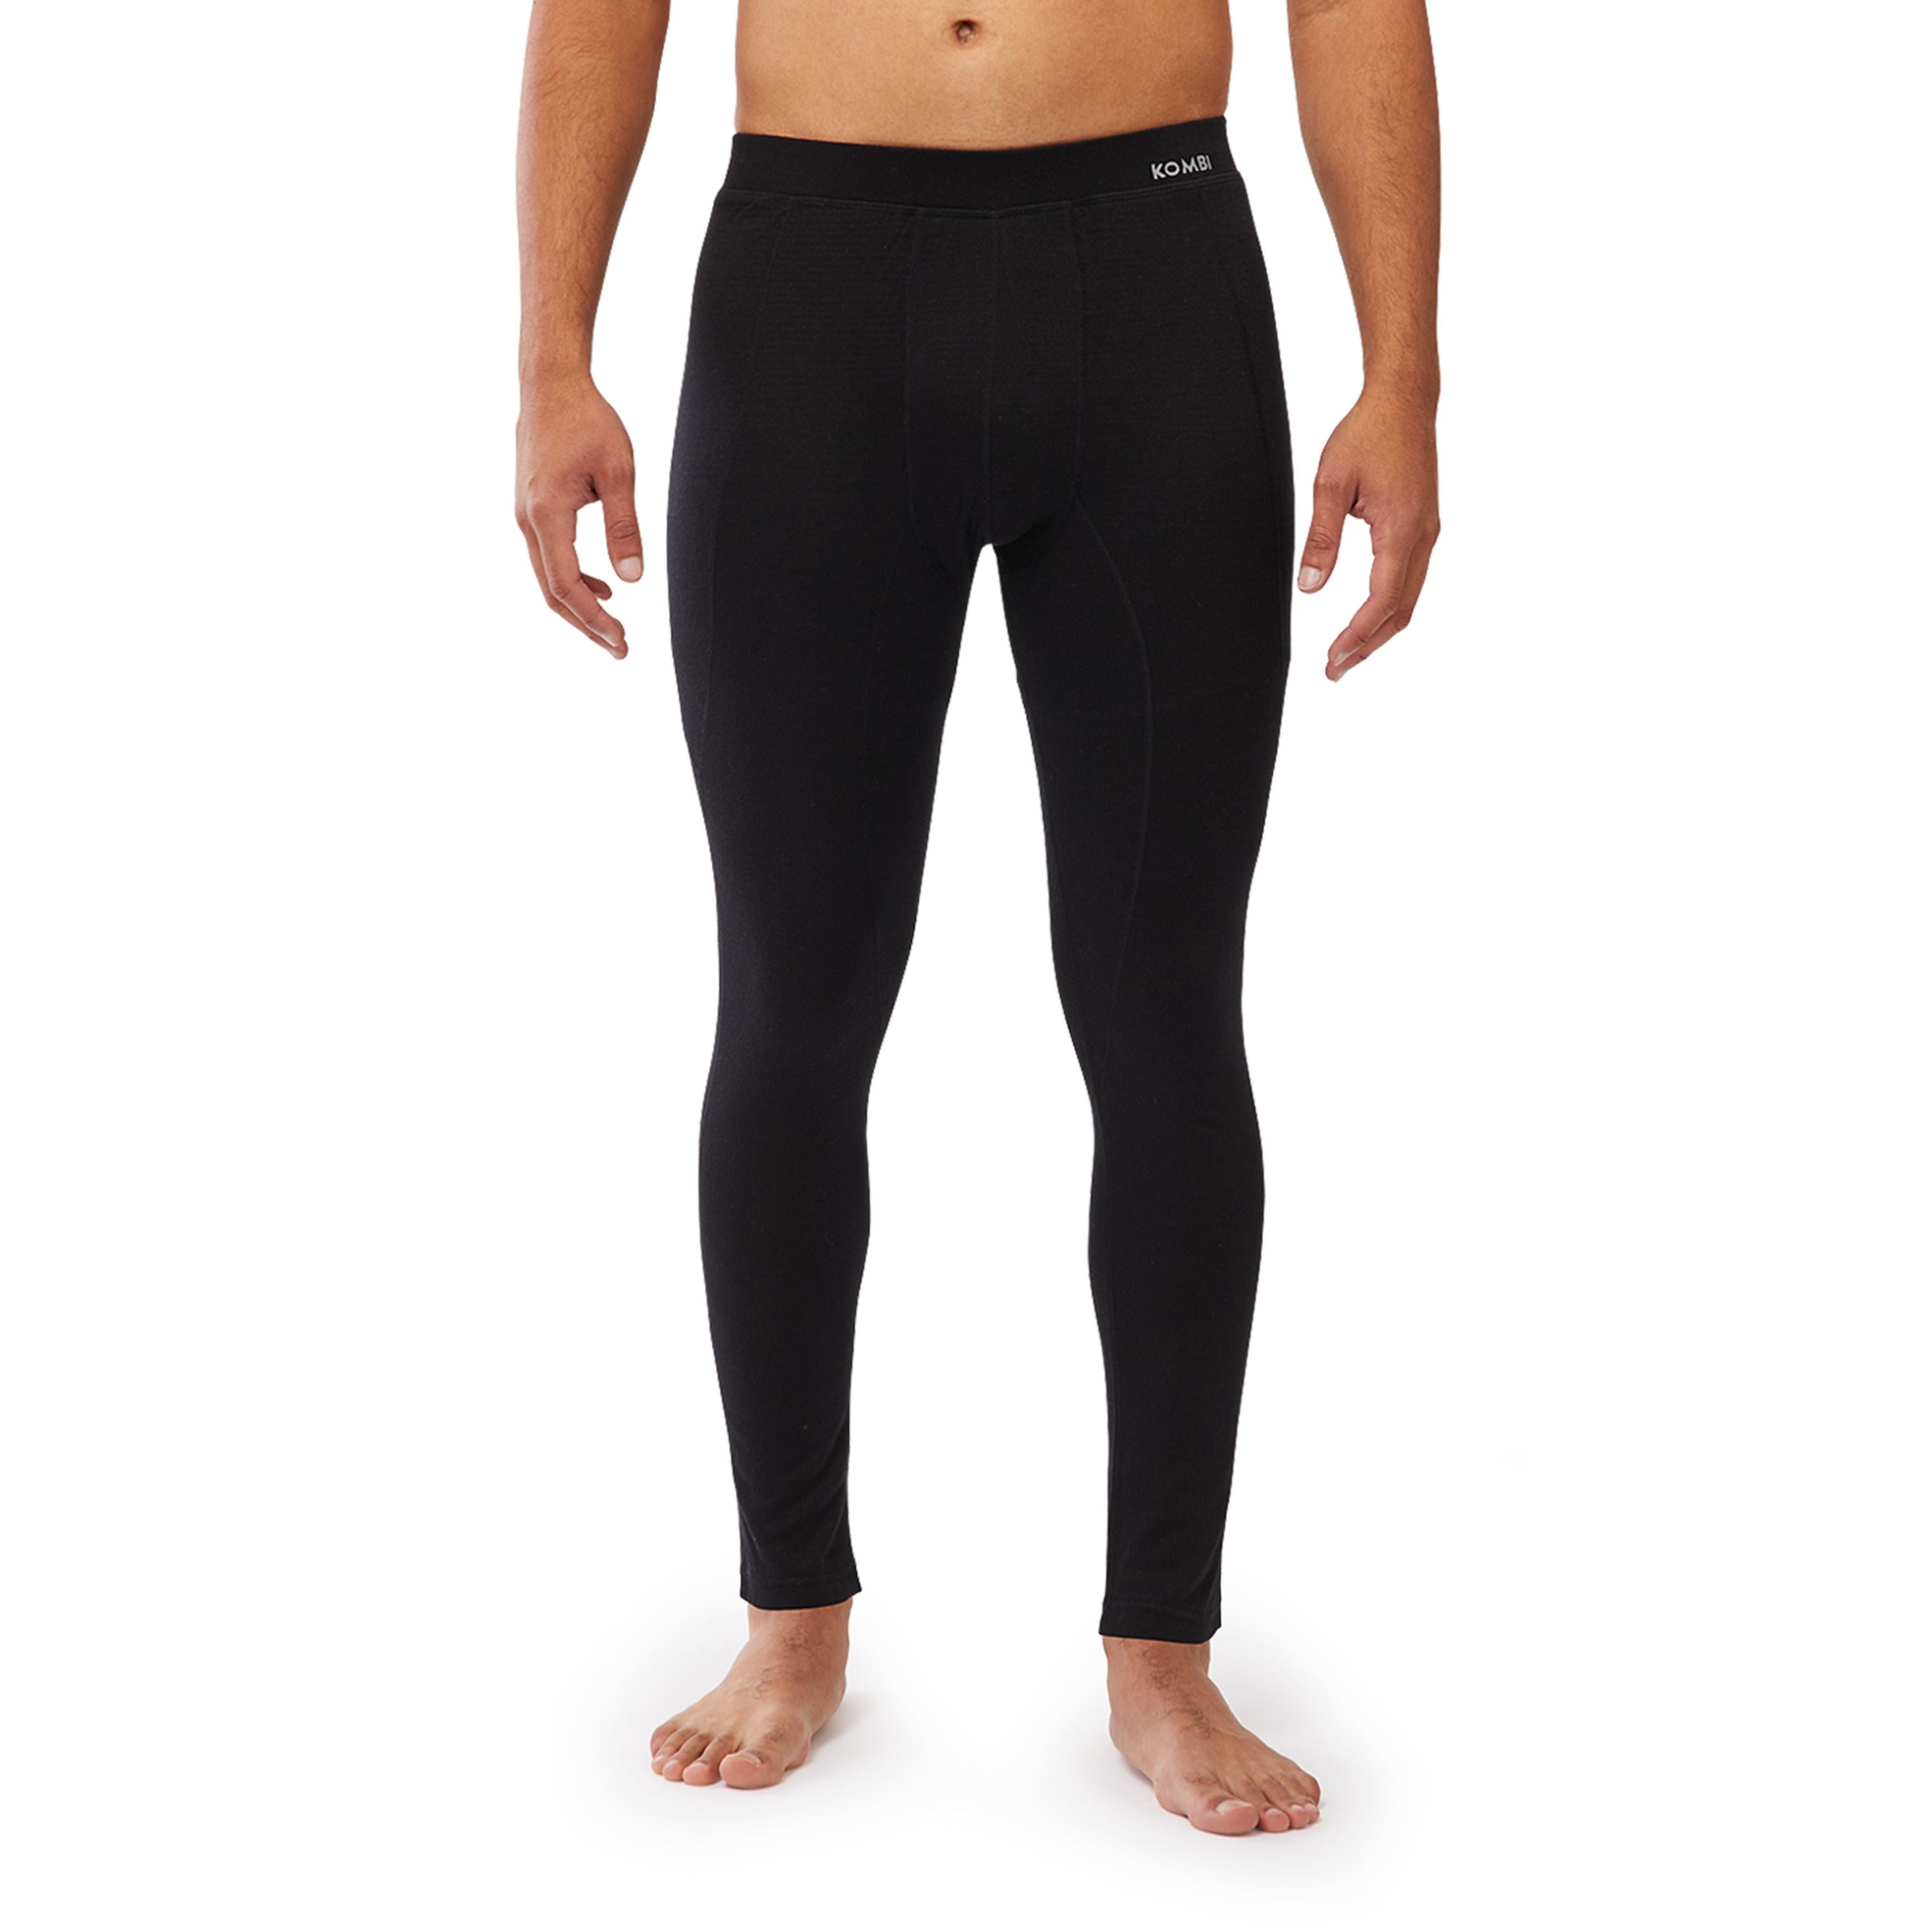 Pantalon sous-vêtement "Merinomix Pro" - Homme||"Merinomix Pro" Base layer bottom - Men’s